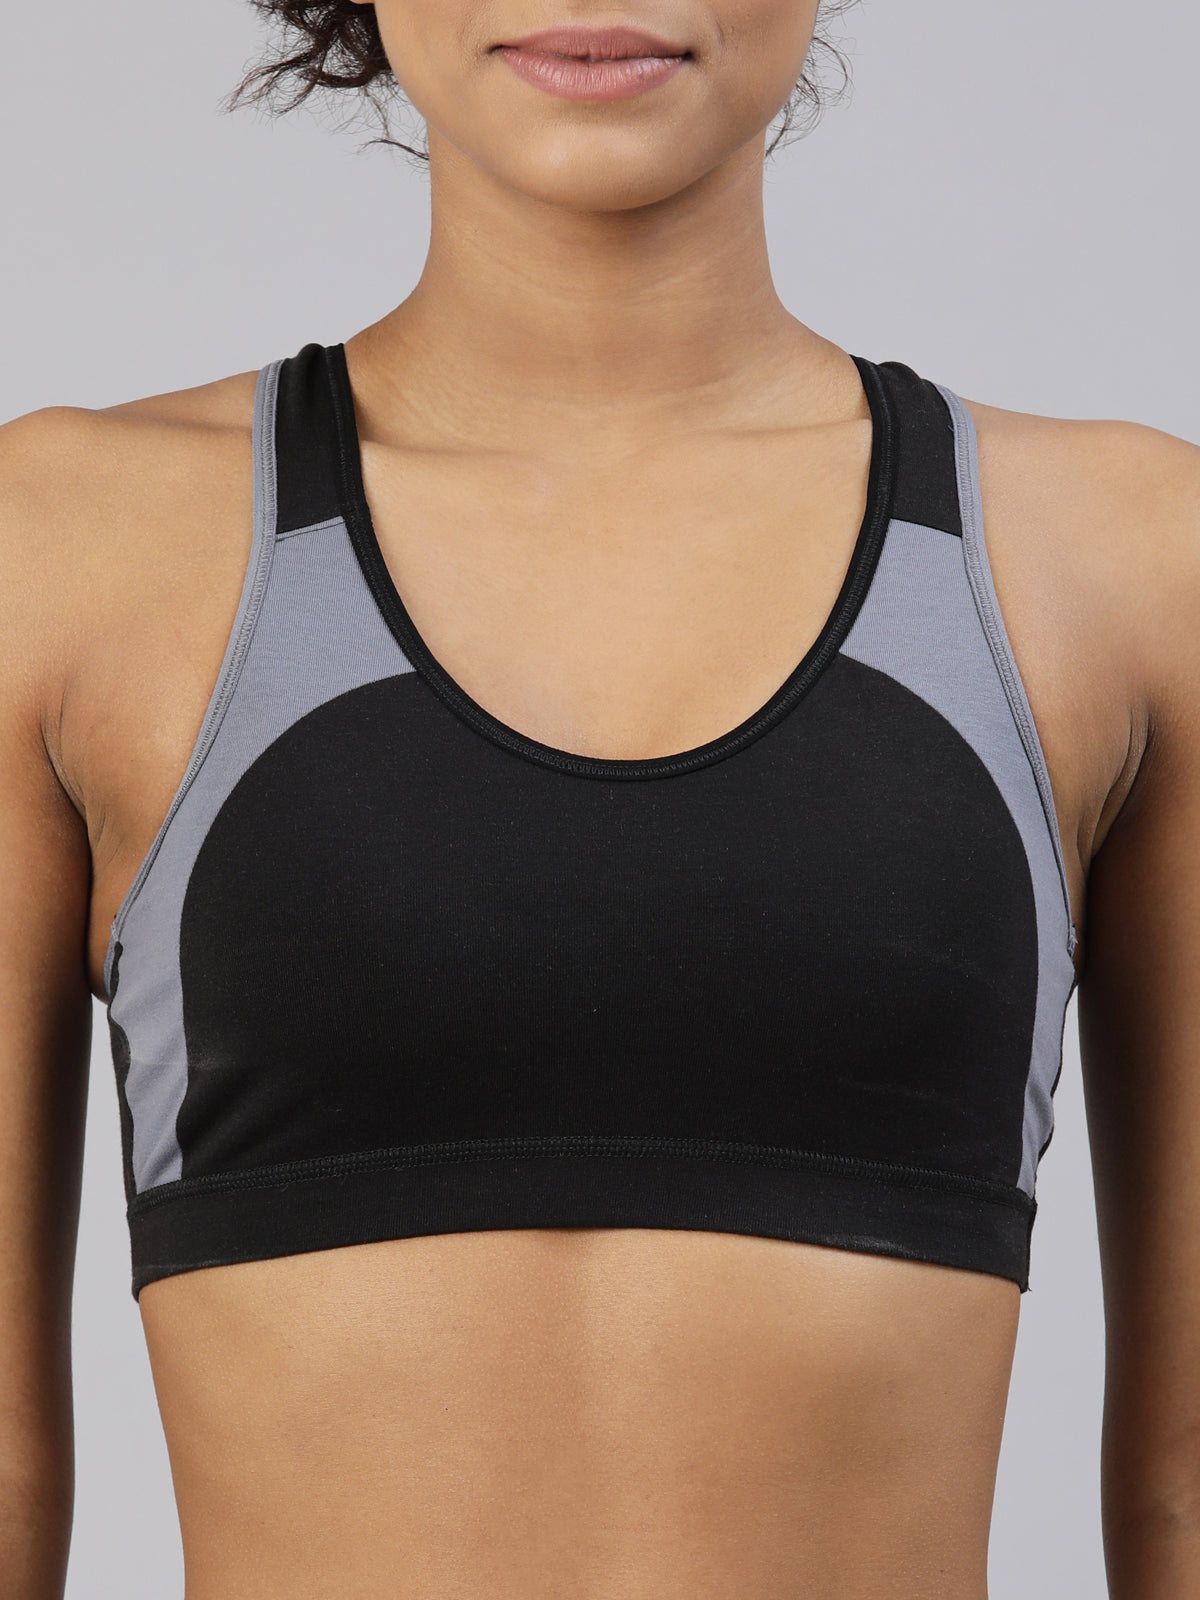 blossom-workout bra-black2-Sports collection-utility based bra